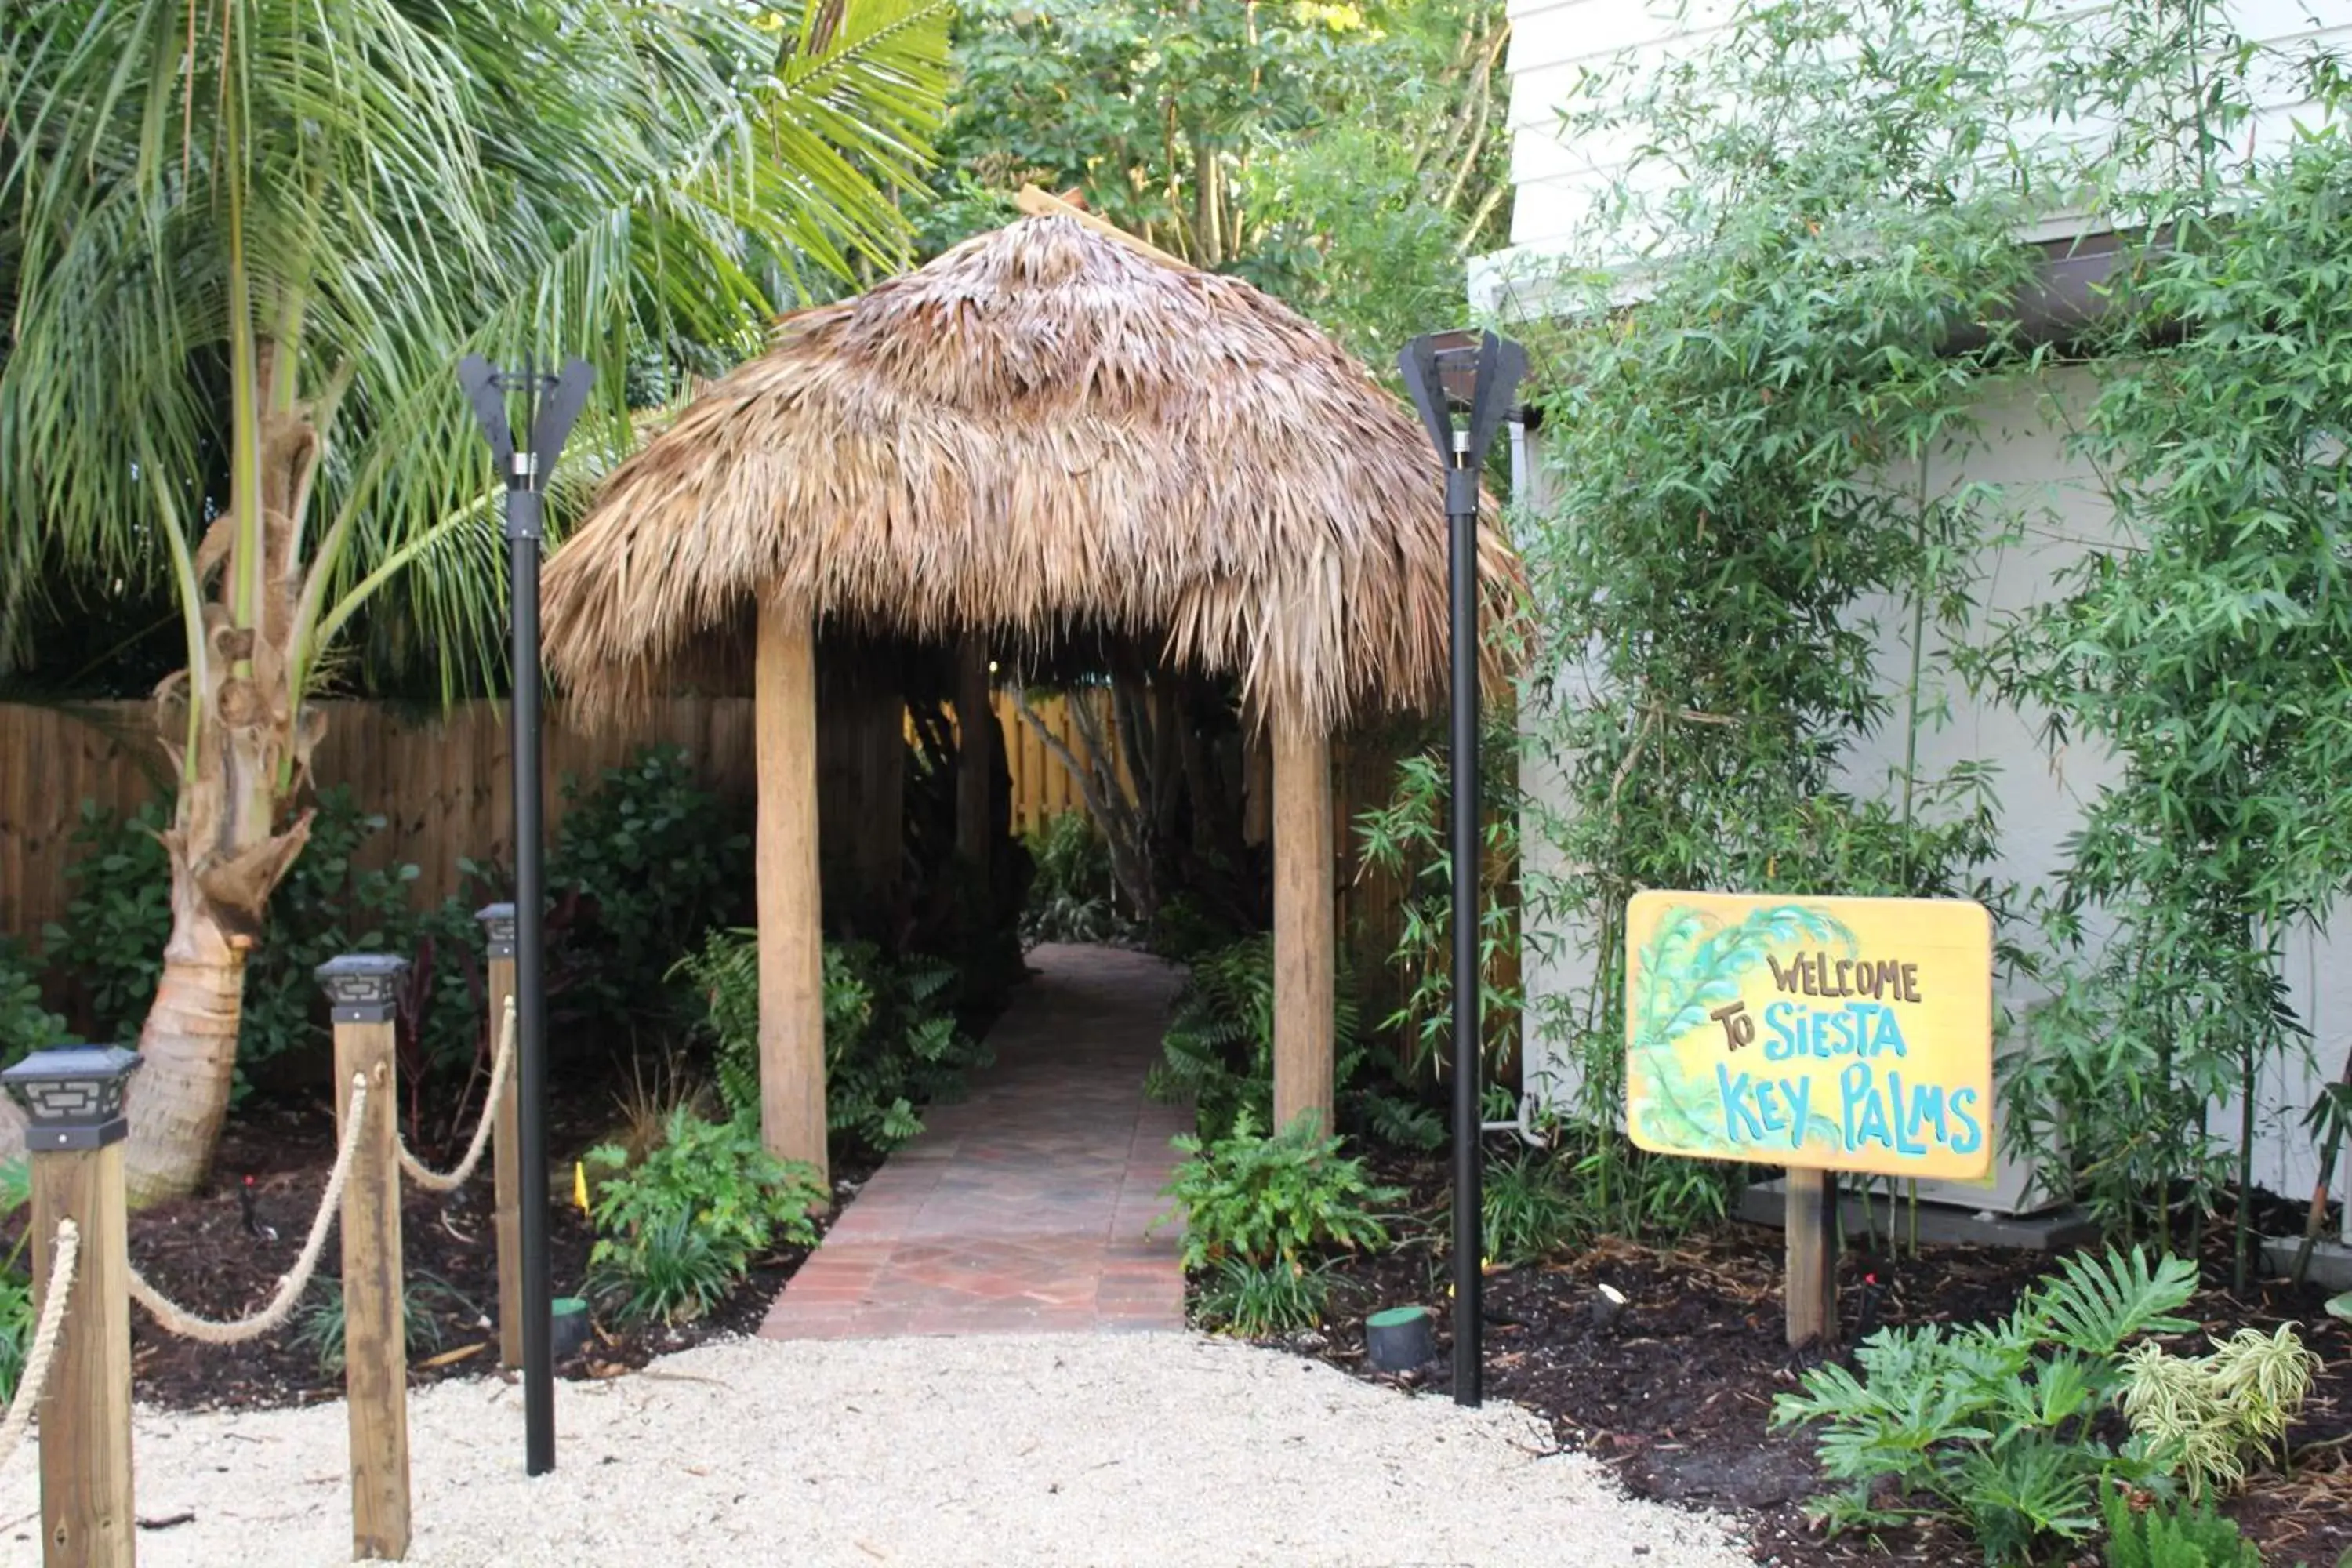 Facade/entrance in Siesta Key Palms Resort